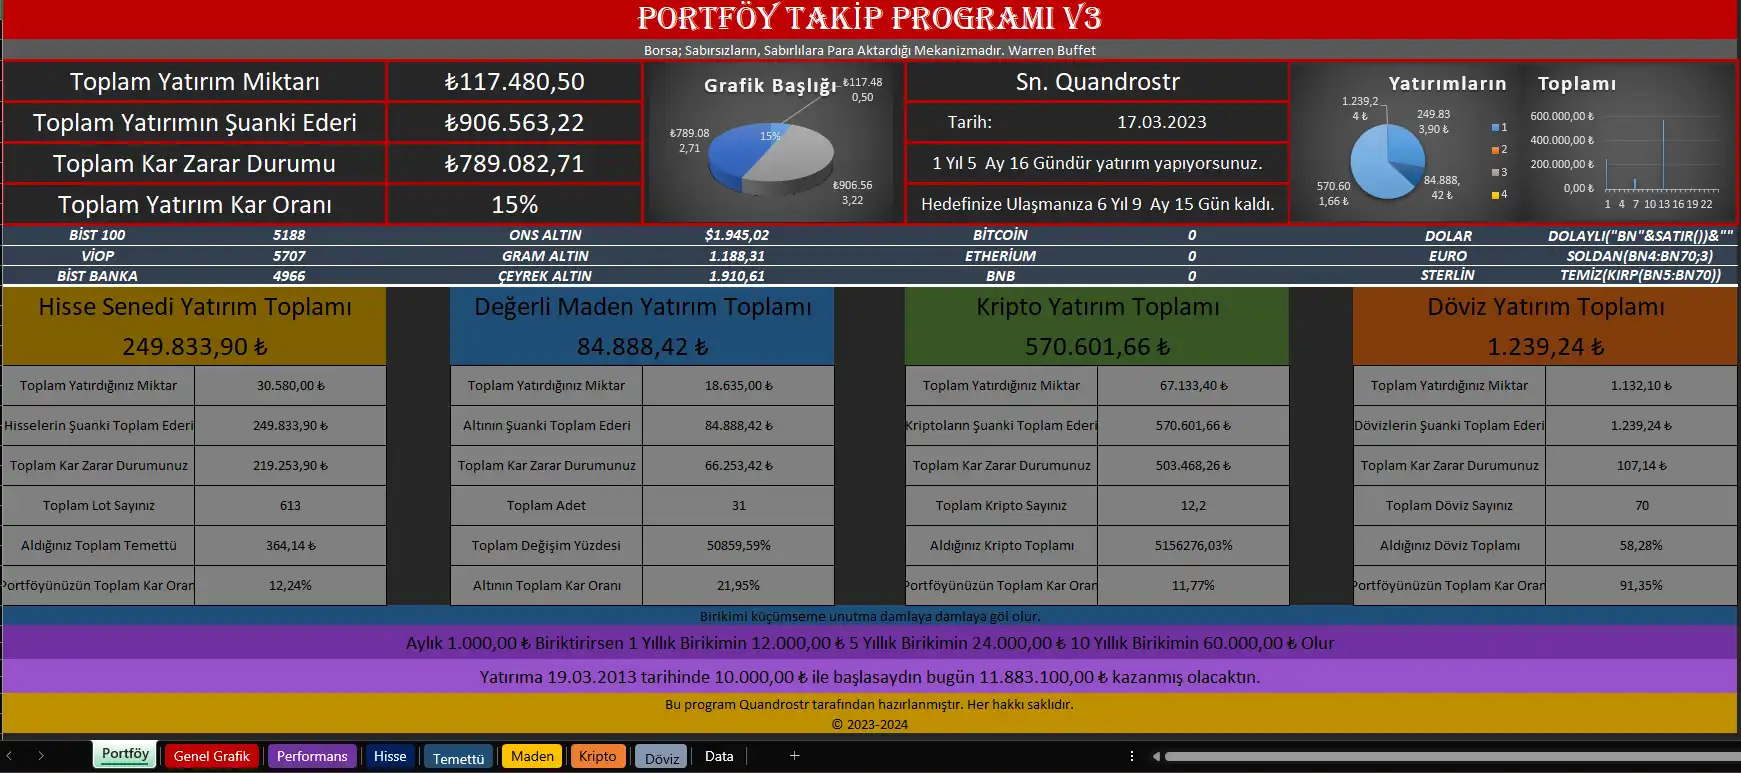 Download web tool or web app MaviCin Portföy Takip Programı